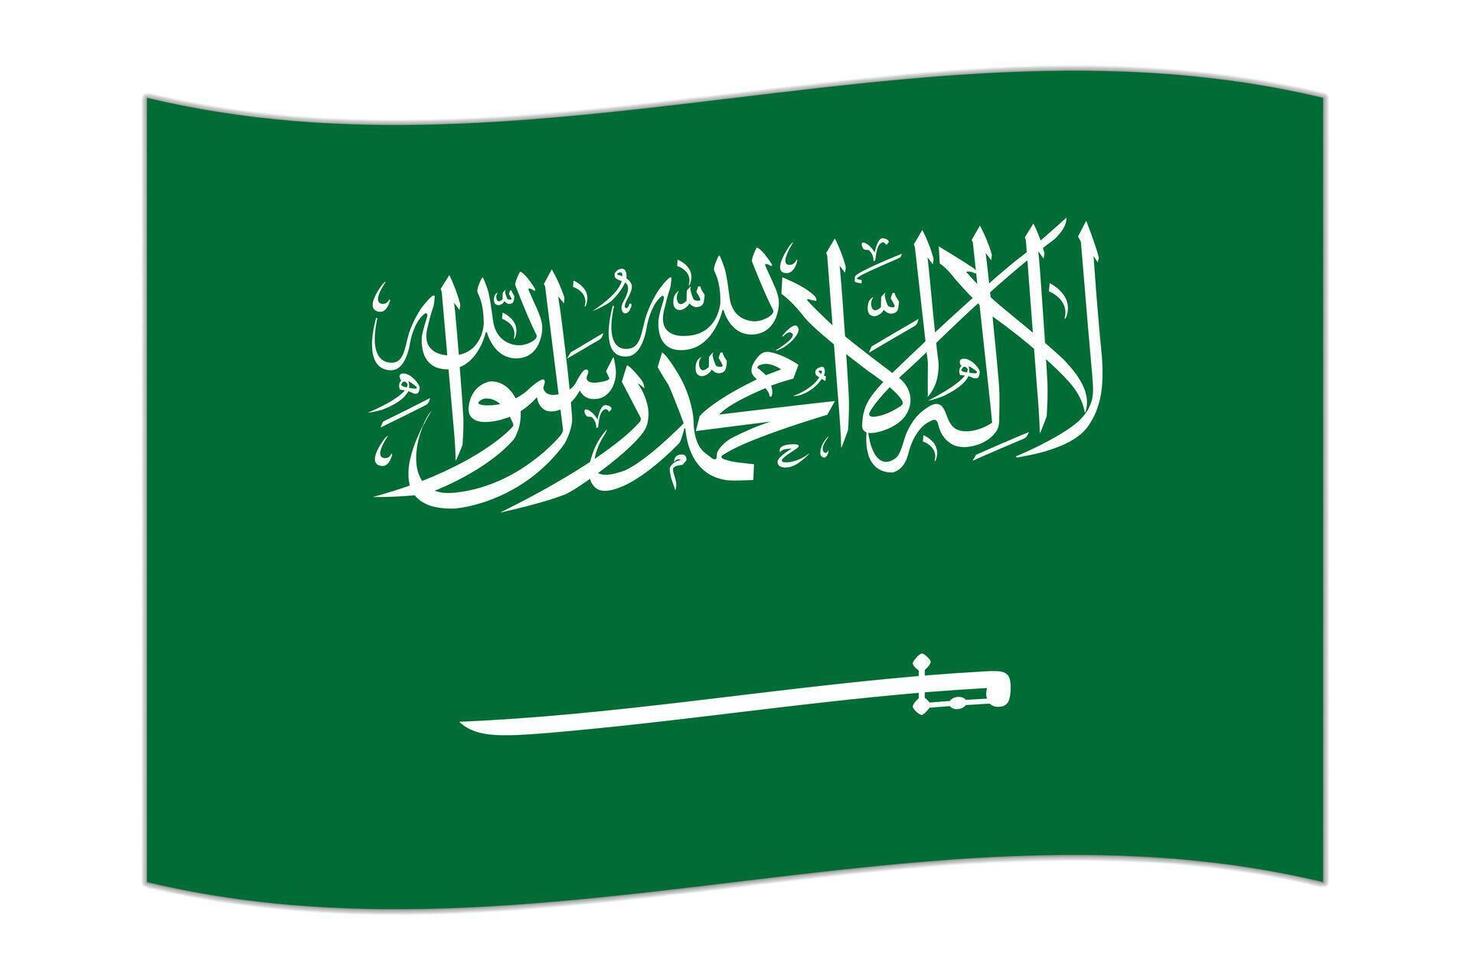 vinka flagga av de Land saudi arabien. illustration. vektor